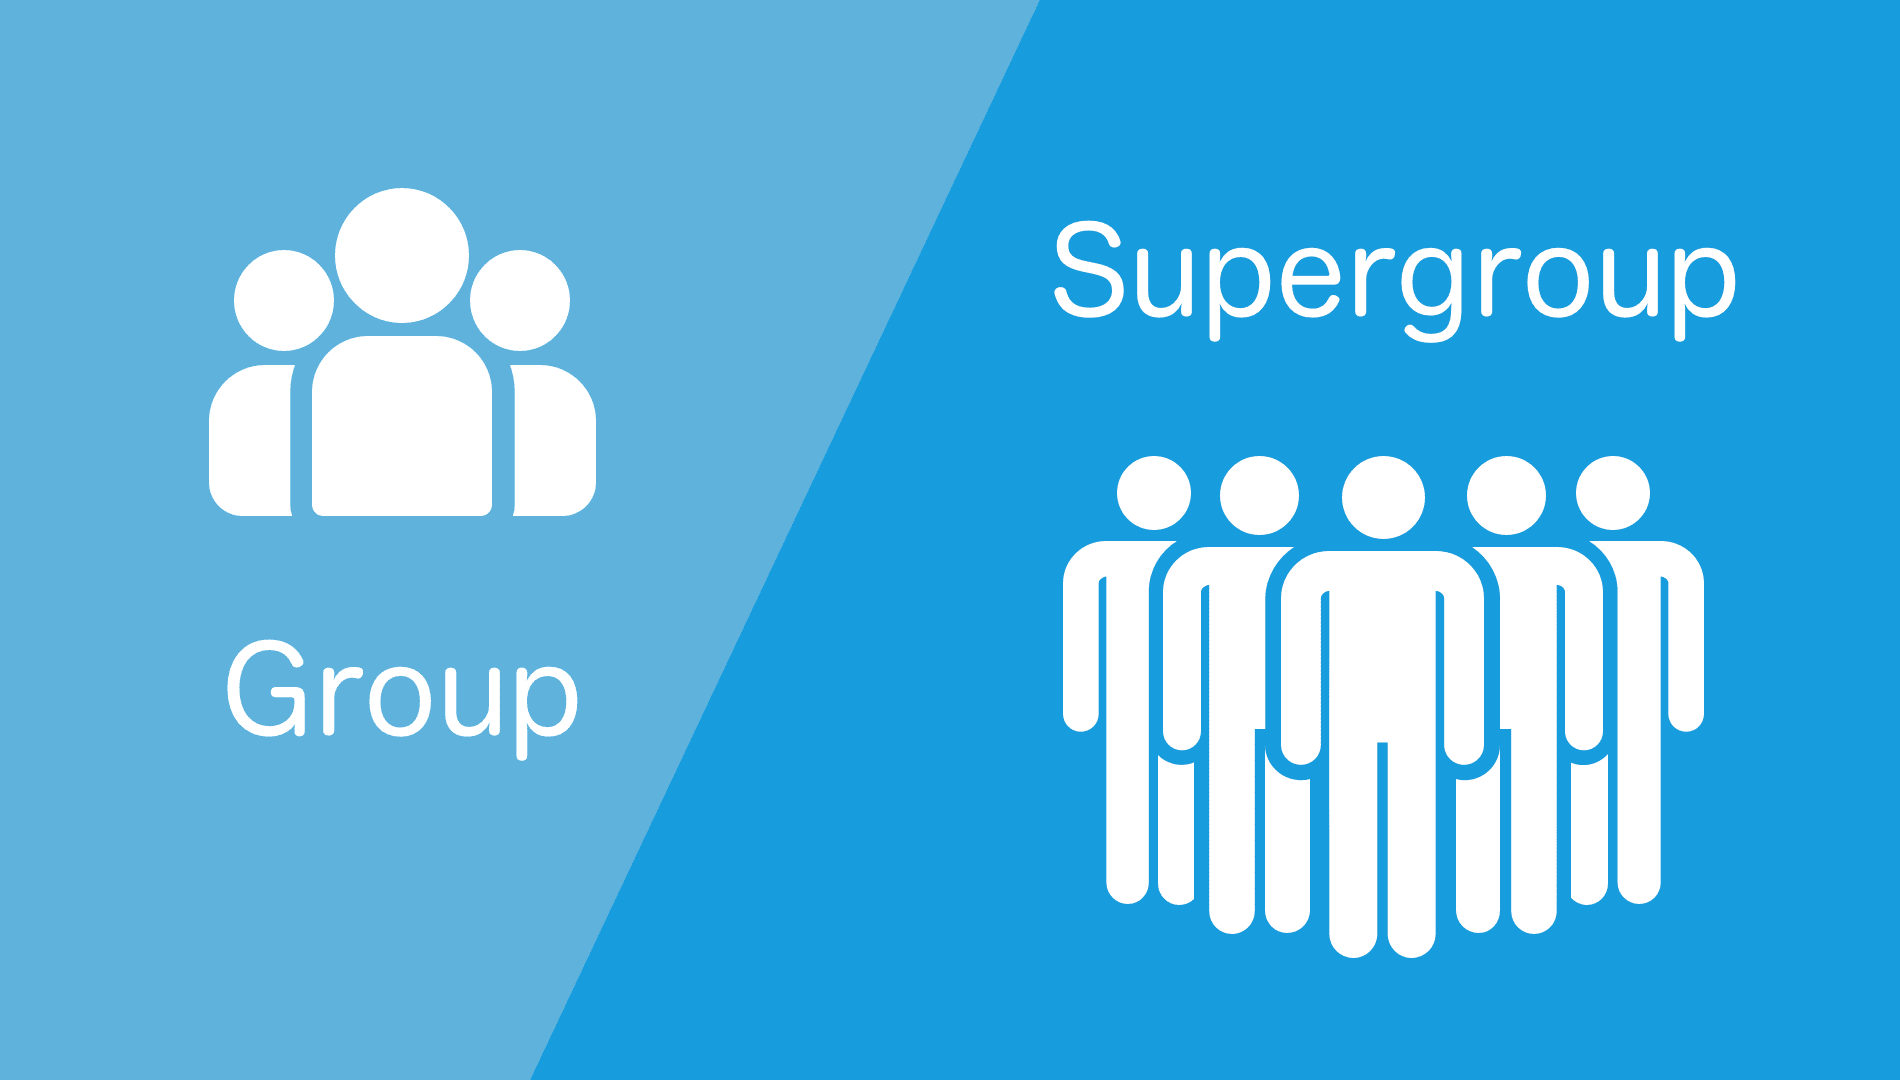 groups vs supergroups